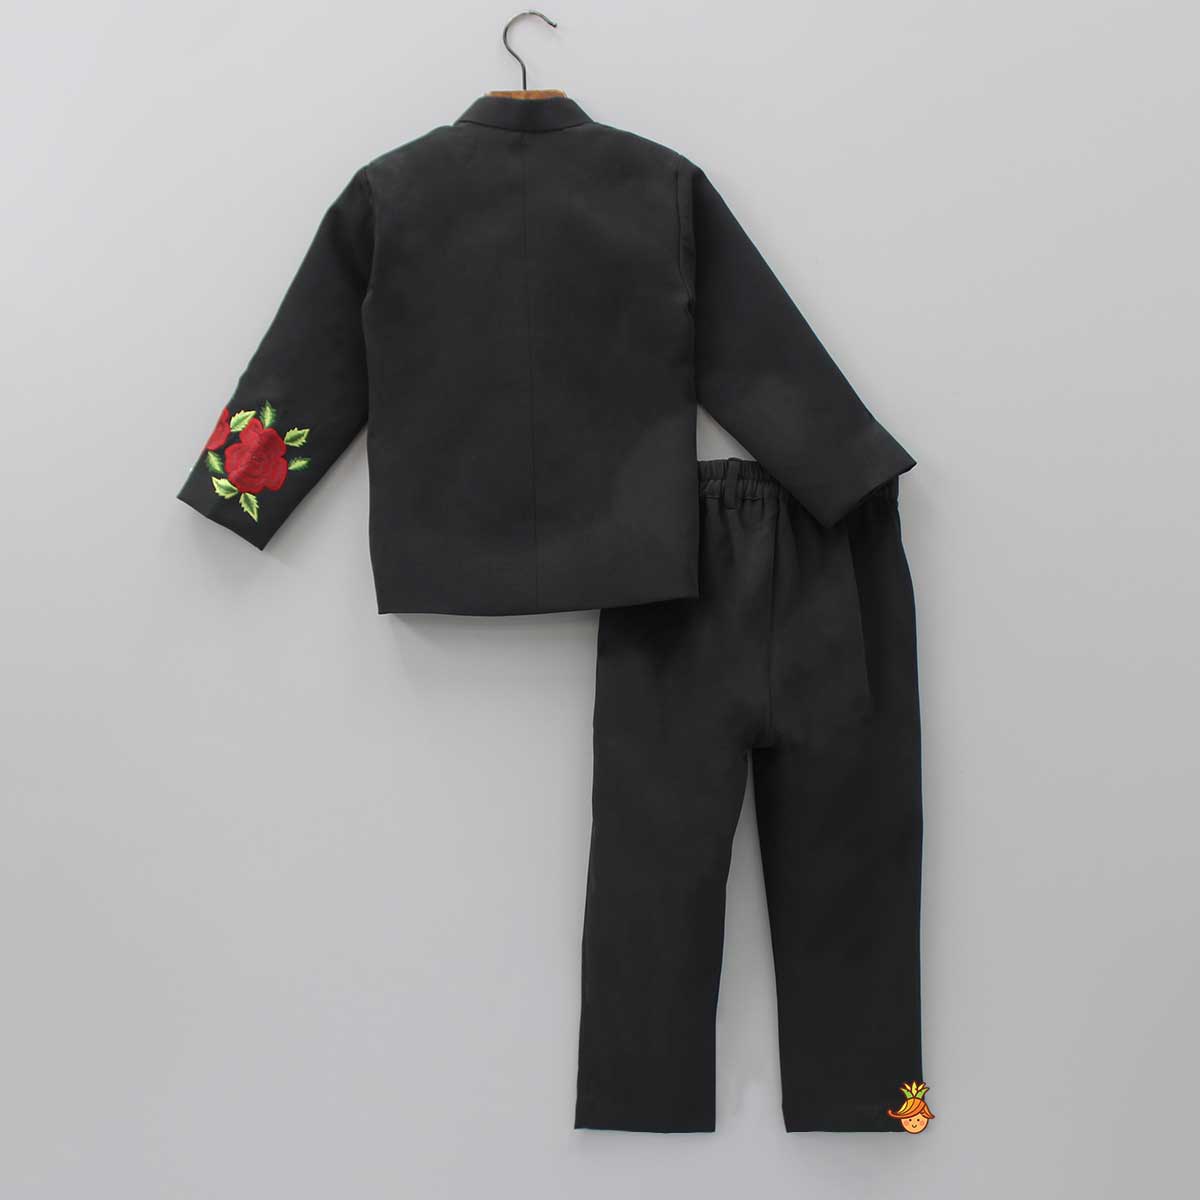 Floral Black Coat And Pant